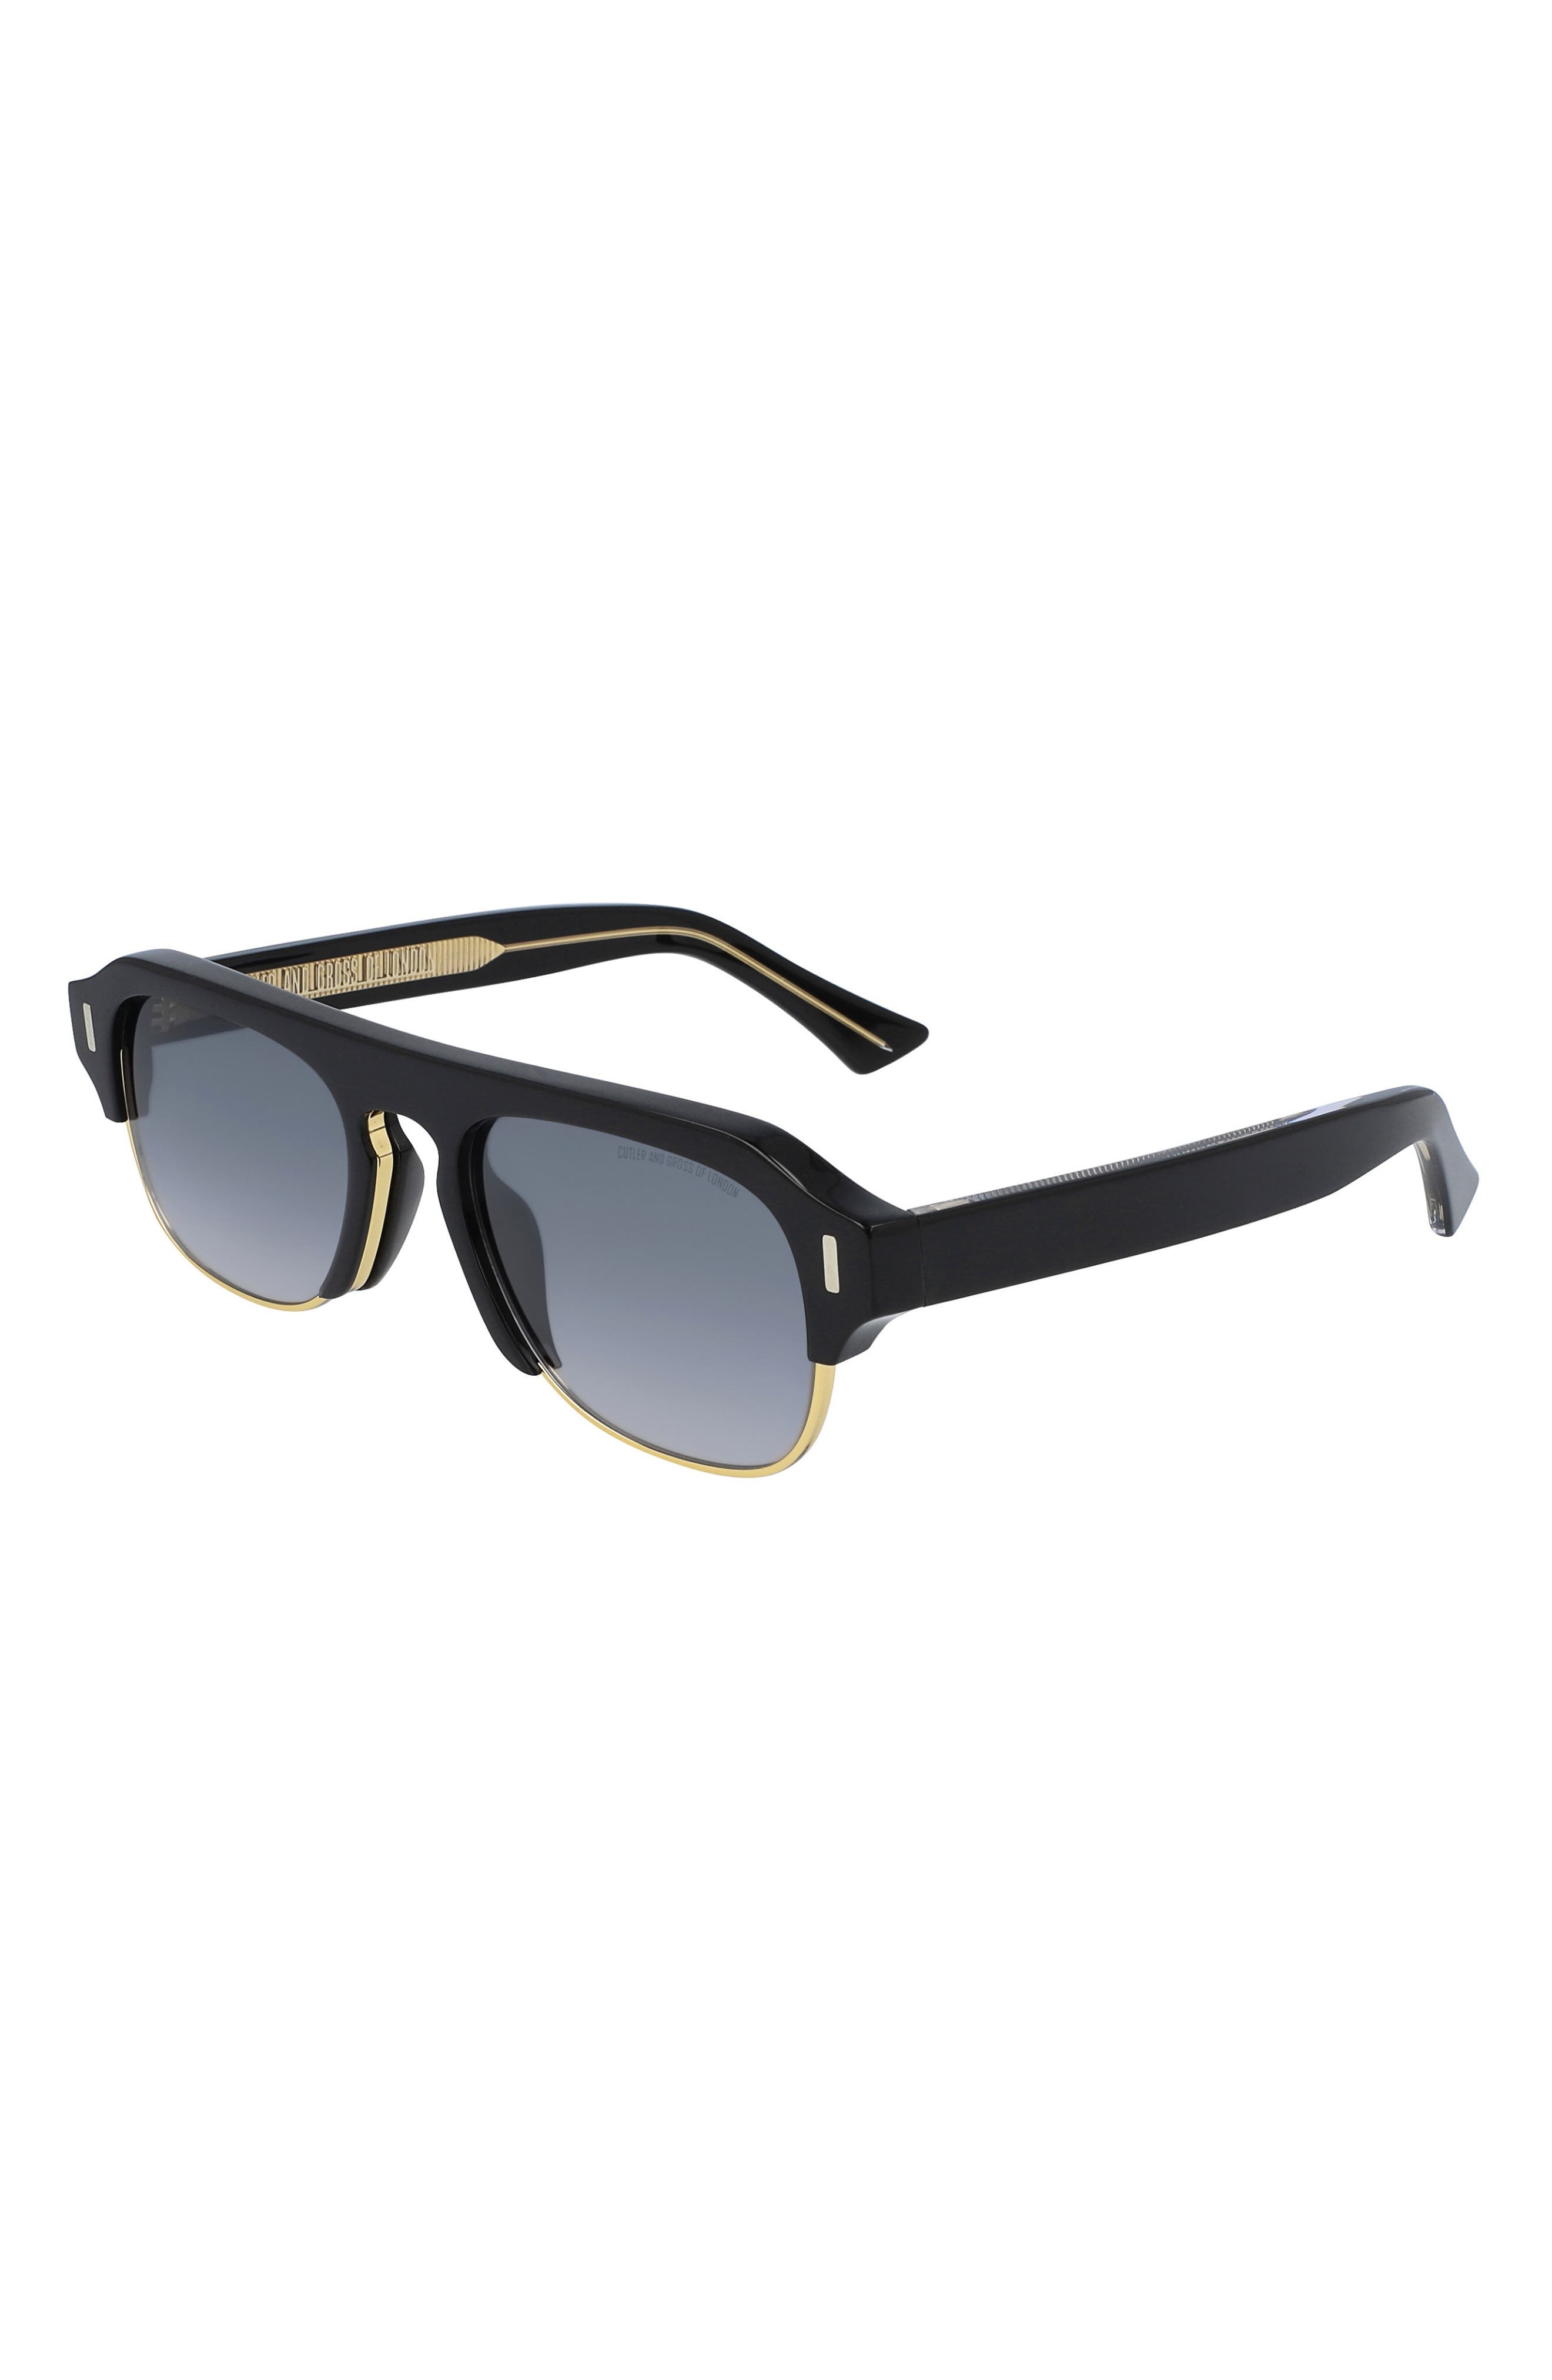 56mm Flat Top Sunglasses in Black/Grey Gradient - 2